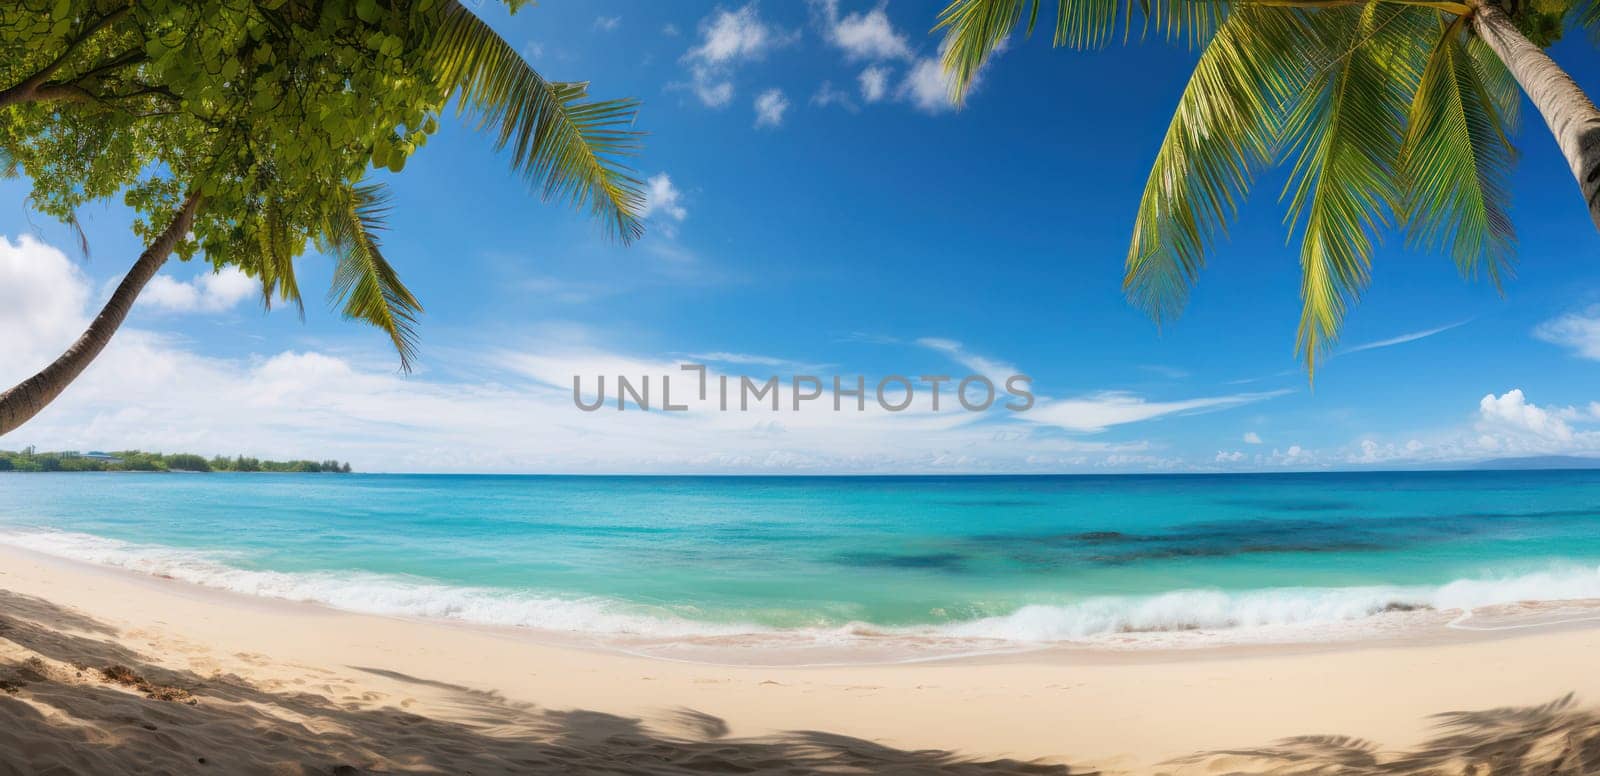 Sandy Tropic Summer: A Serene Beach Paradise - Nature Unveiled. by Vichizh